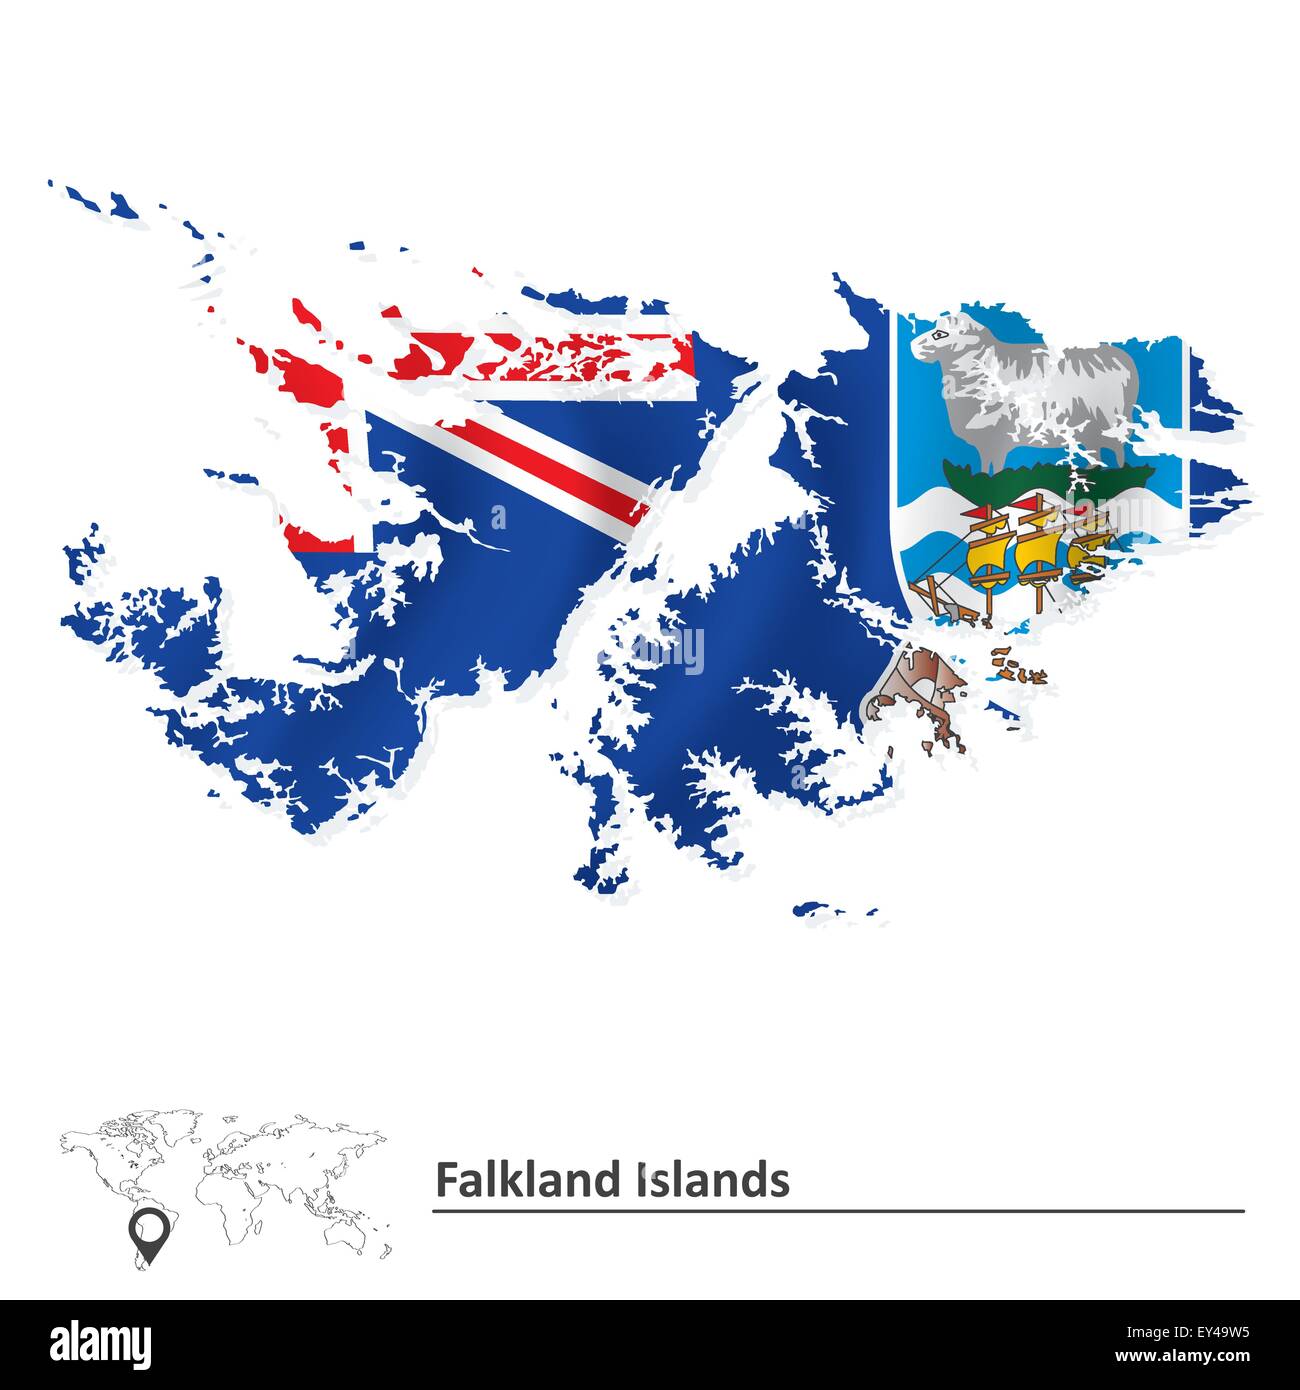 Karte der Falkland-Inseln mit Fahne - Vektor-illustration Stock Vektor